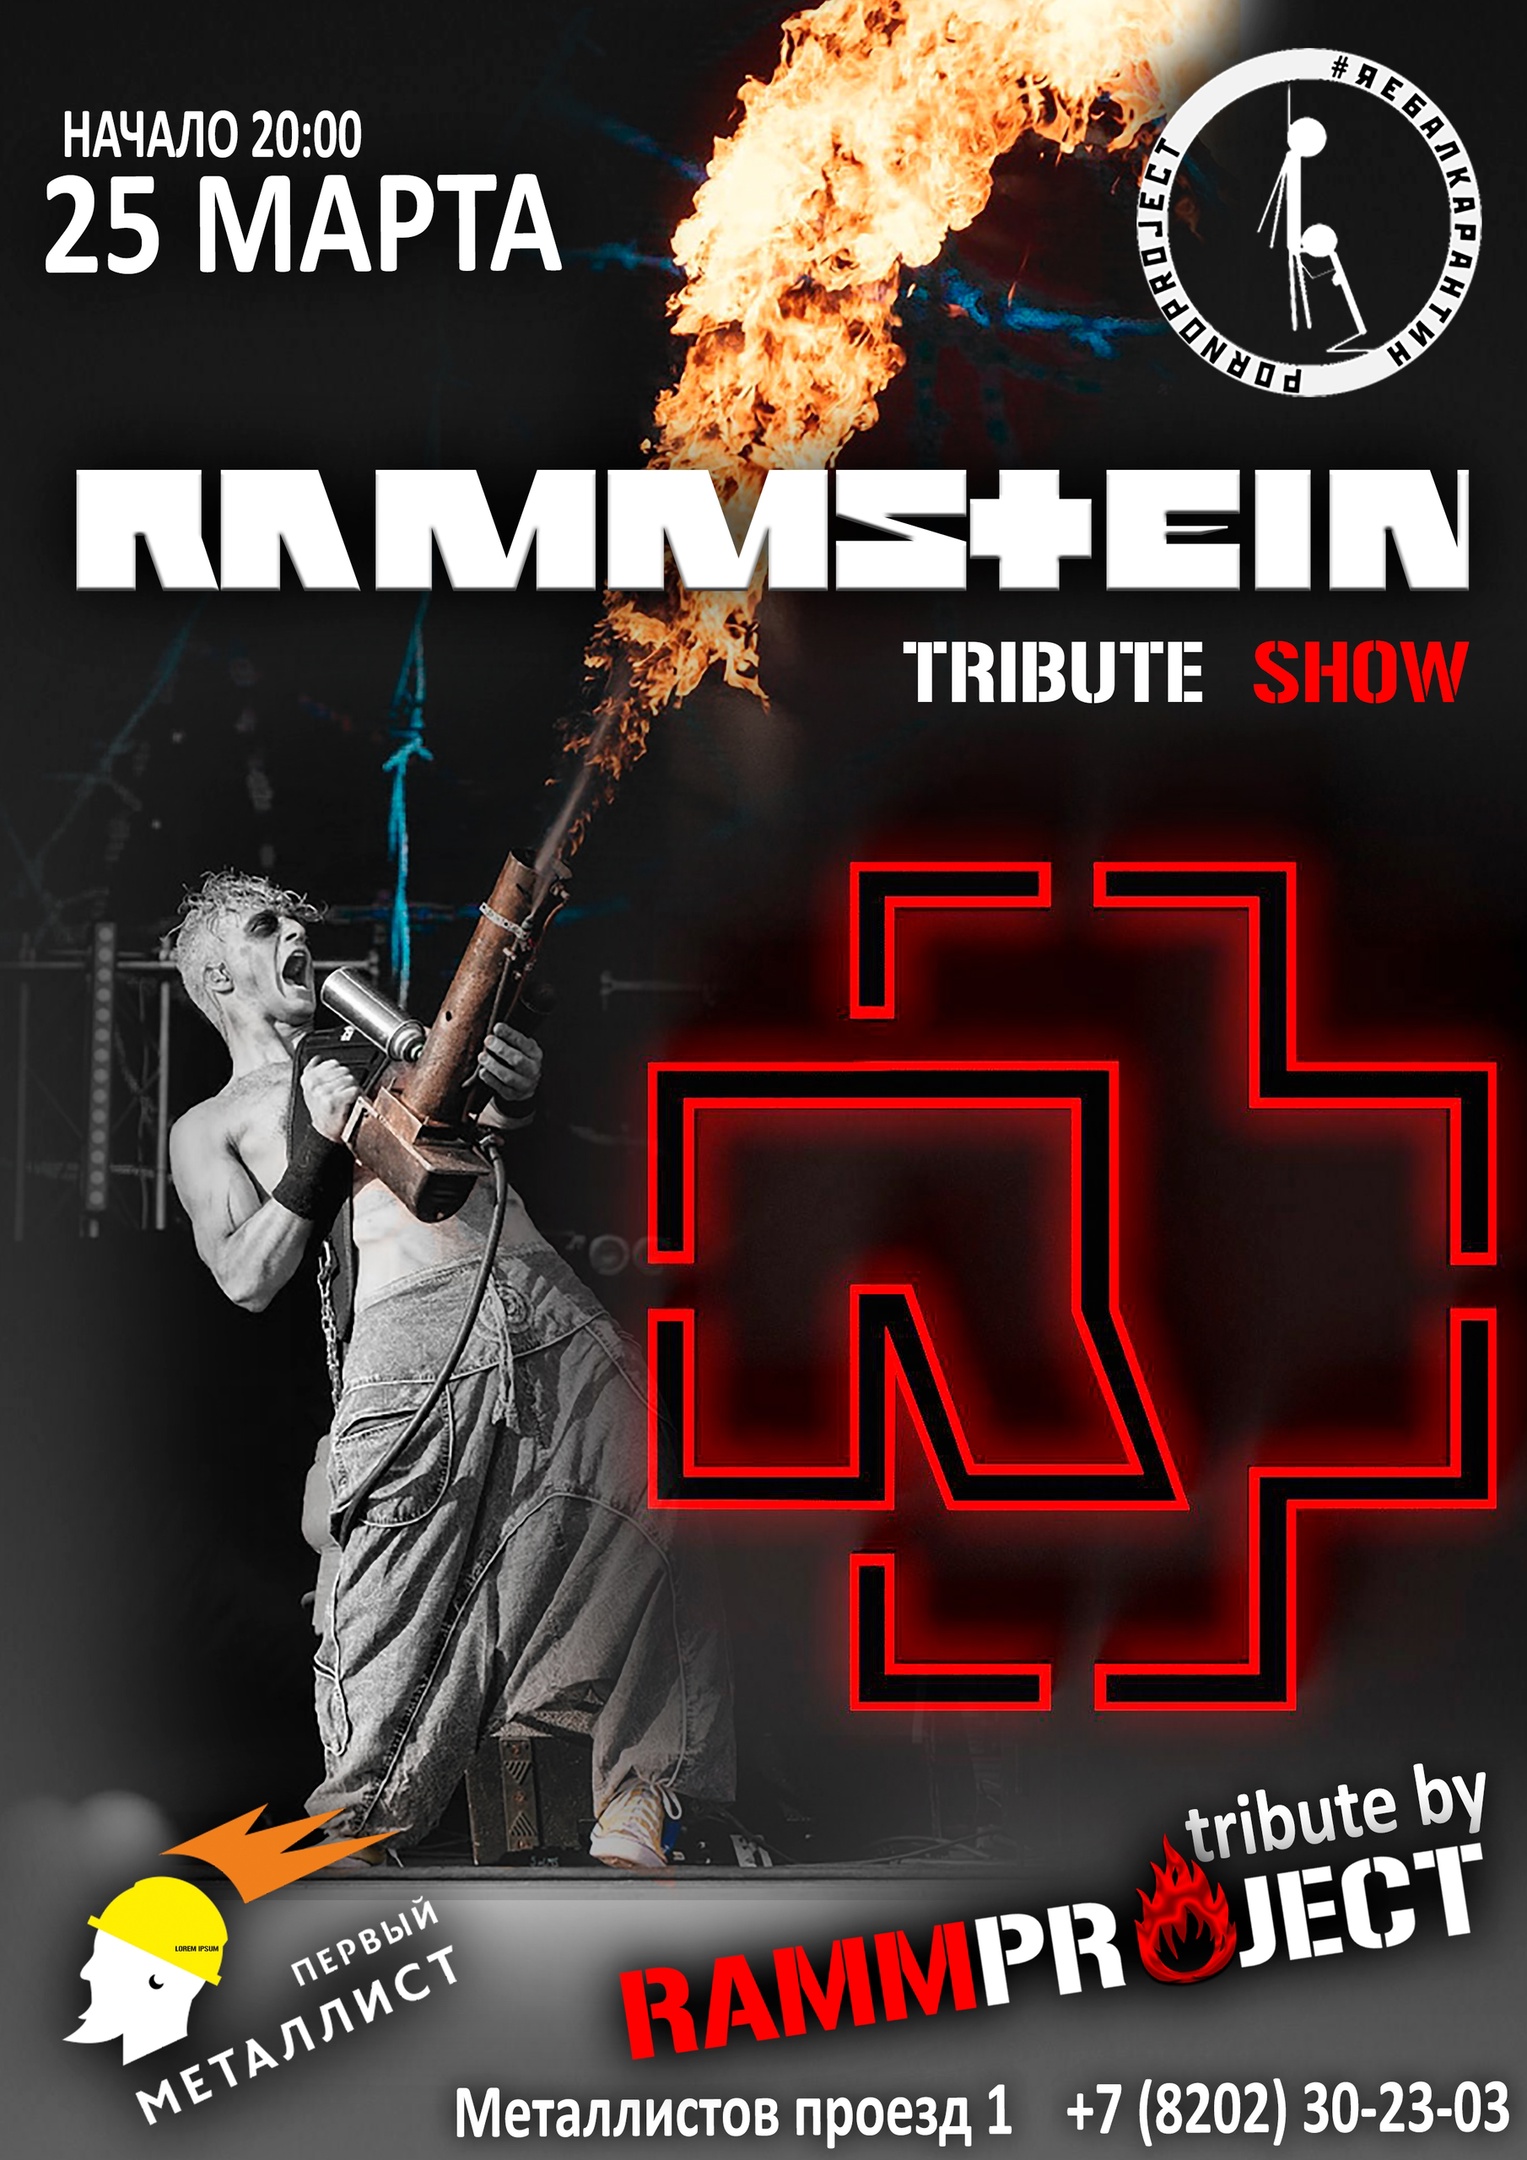 RAMMSTEIN tribute show